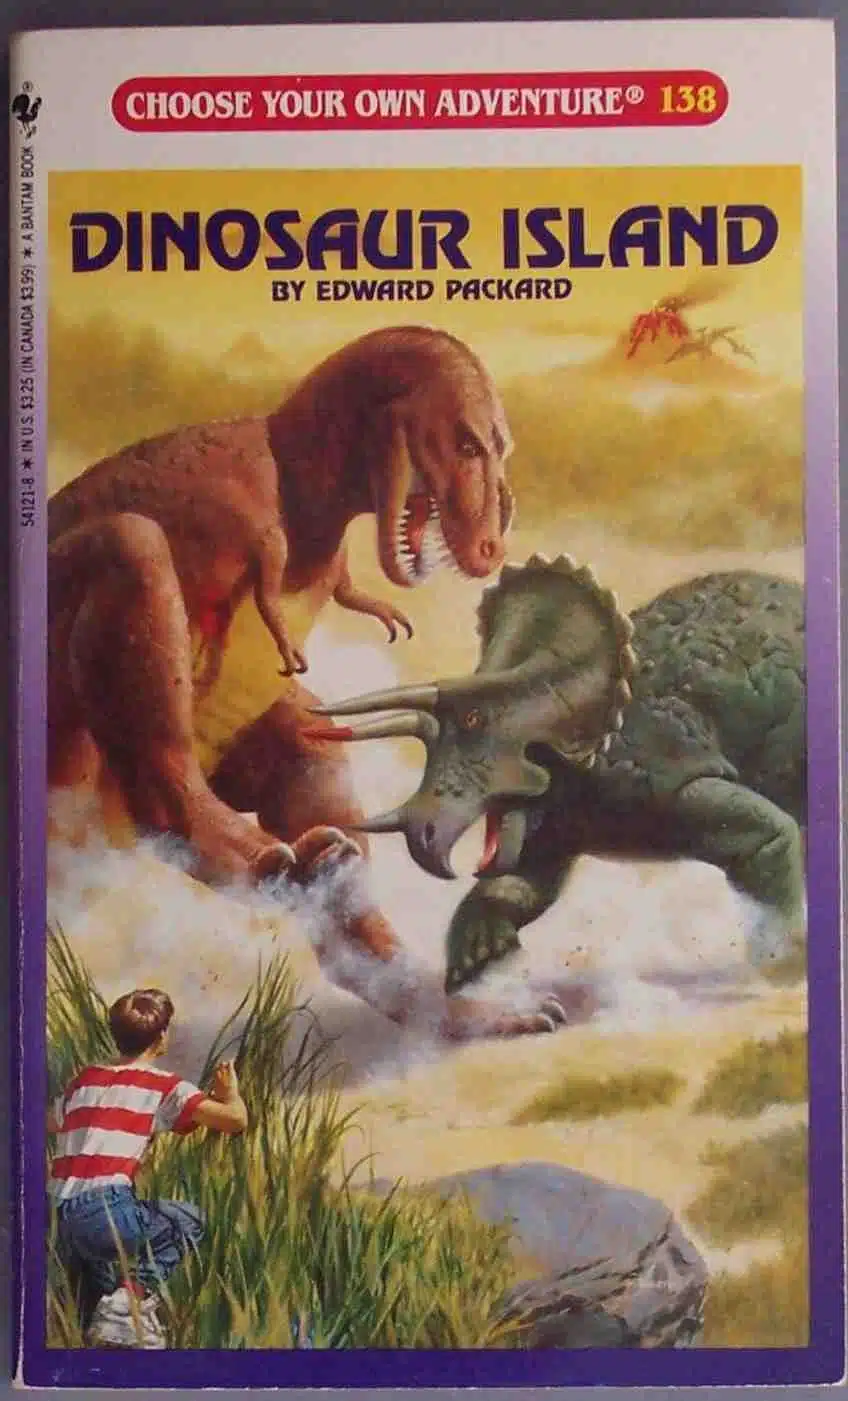 Dinosaur Island Adventure book cover.